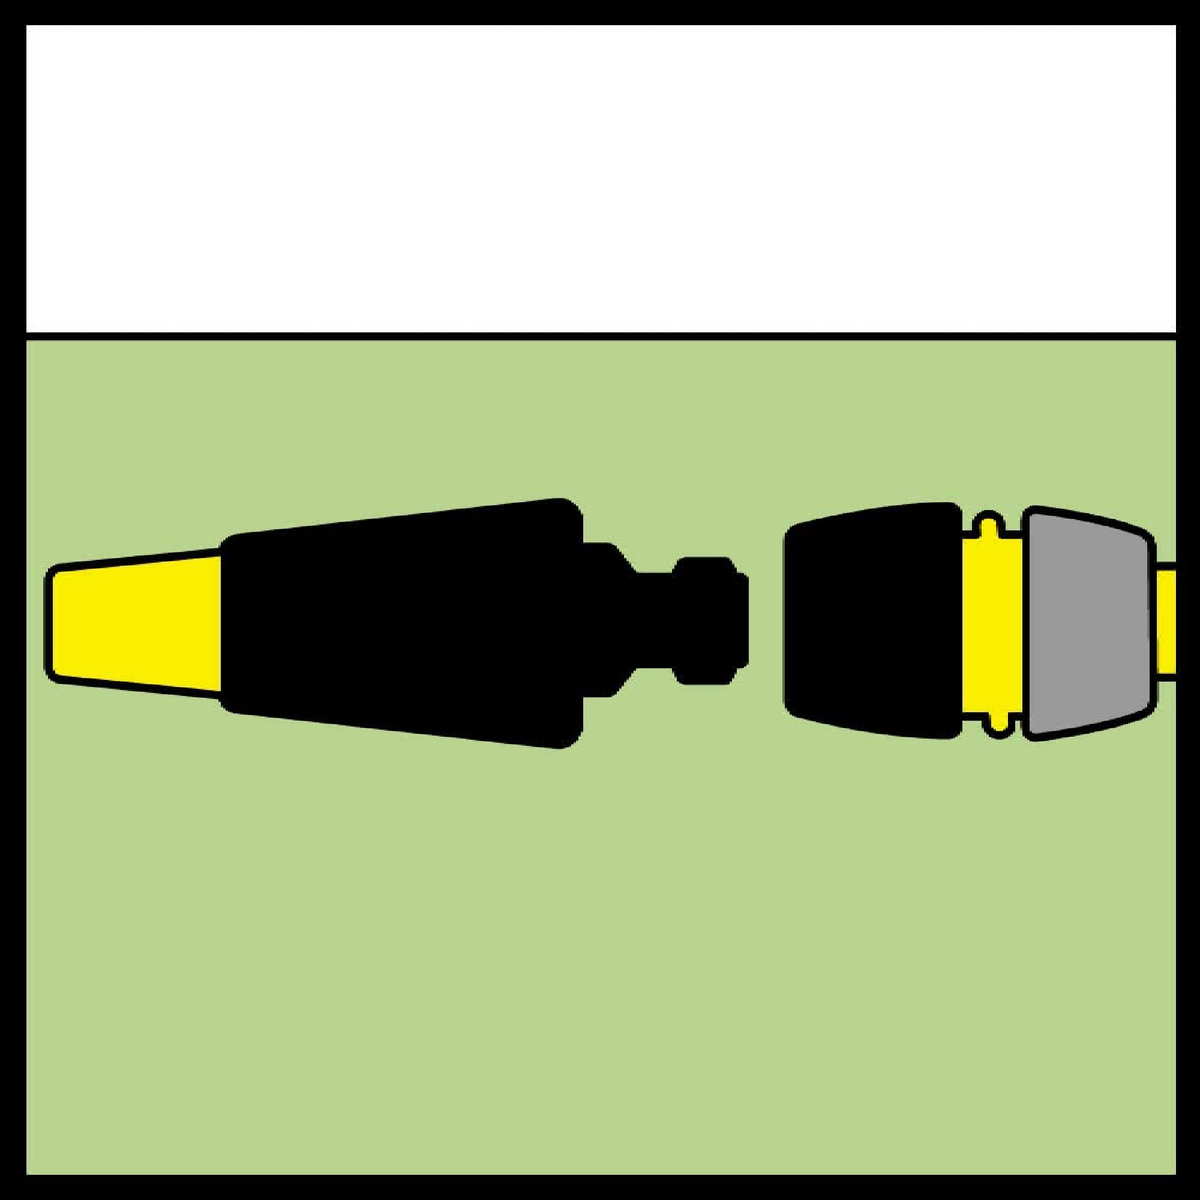 Karcher Universal Hose Coupling Plus, Yellow / Black, 26451930